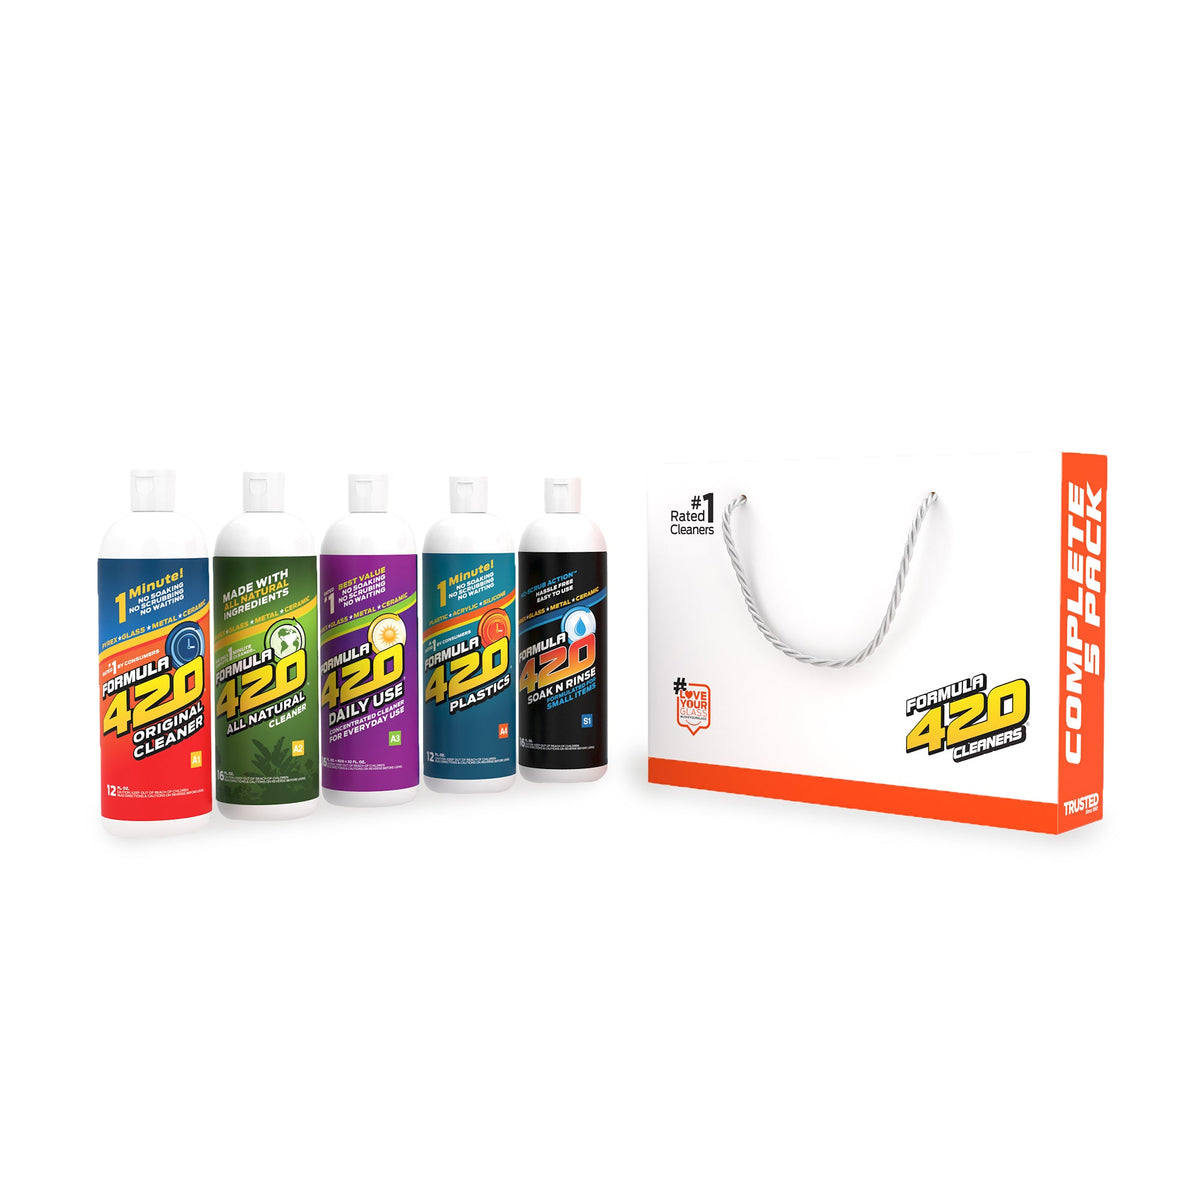  Formula420 Formula 420 Cleaning Kit, Glass Cleaner Value Pack